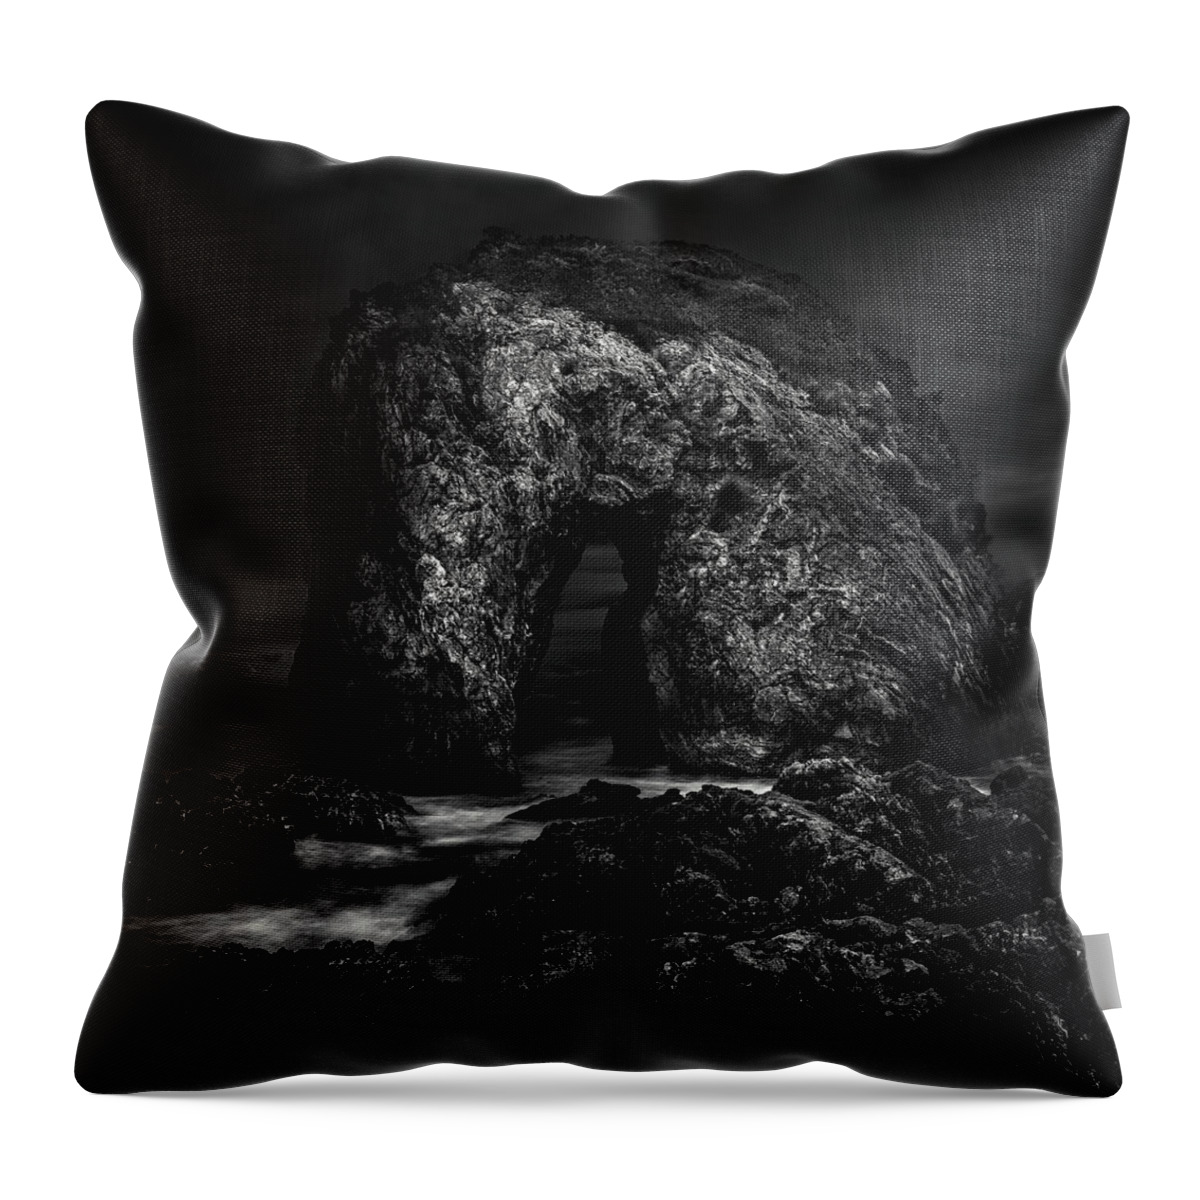 Monochrome Throw Pillow featuring the photograph Horse Head Rock by Grant Galbraith